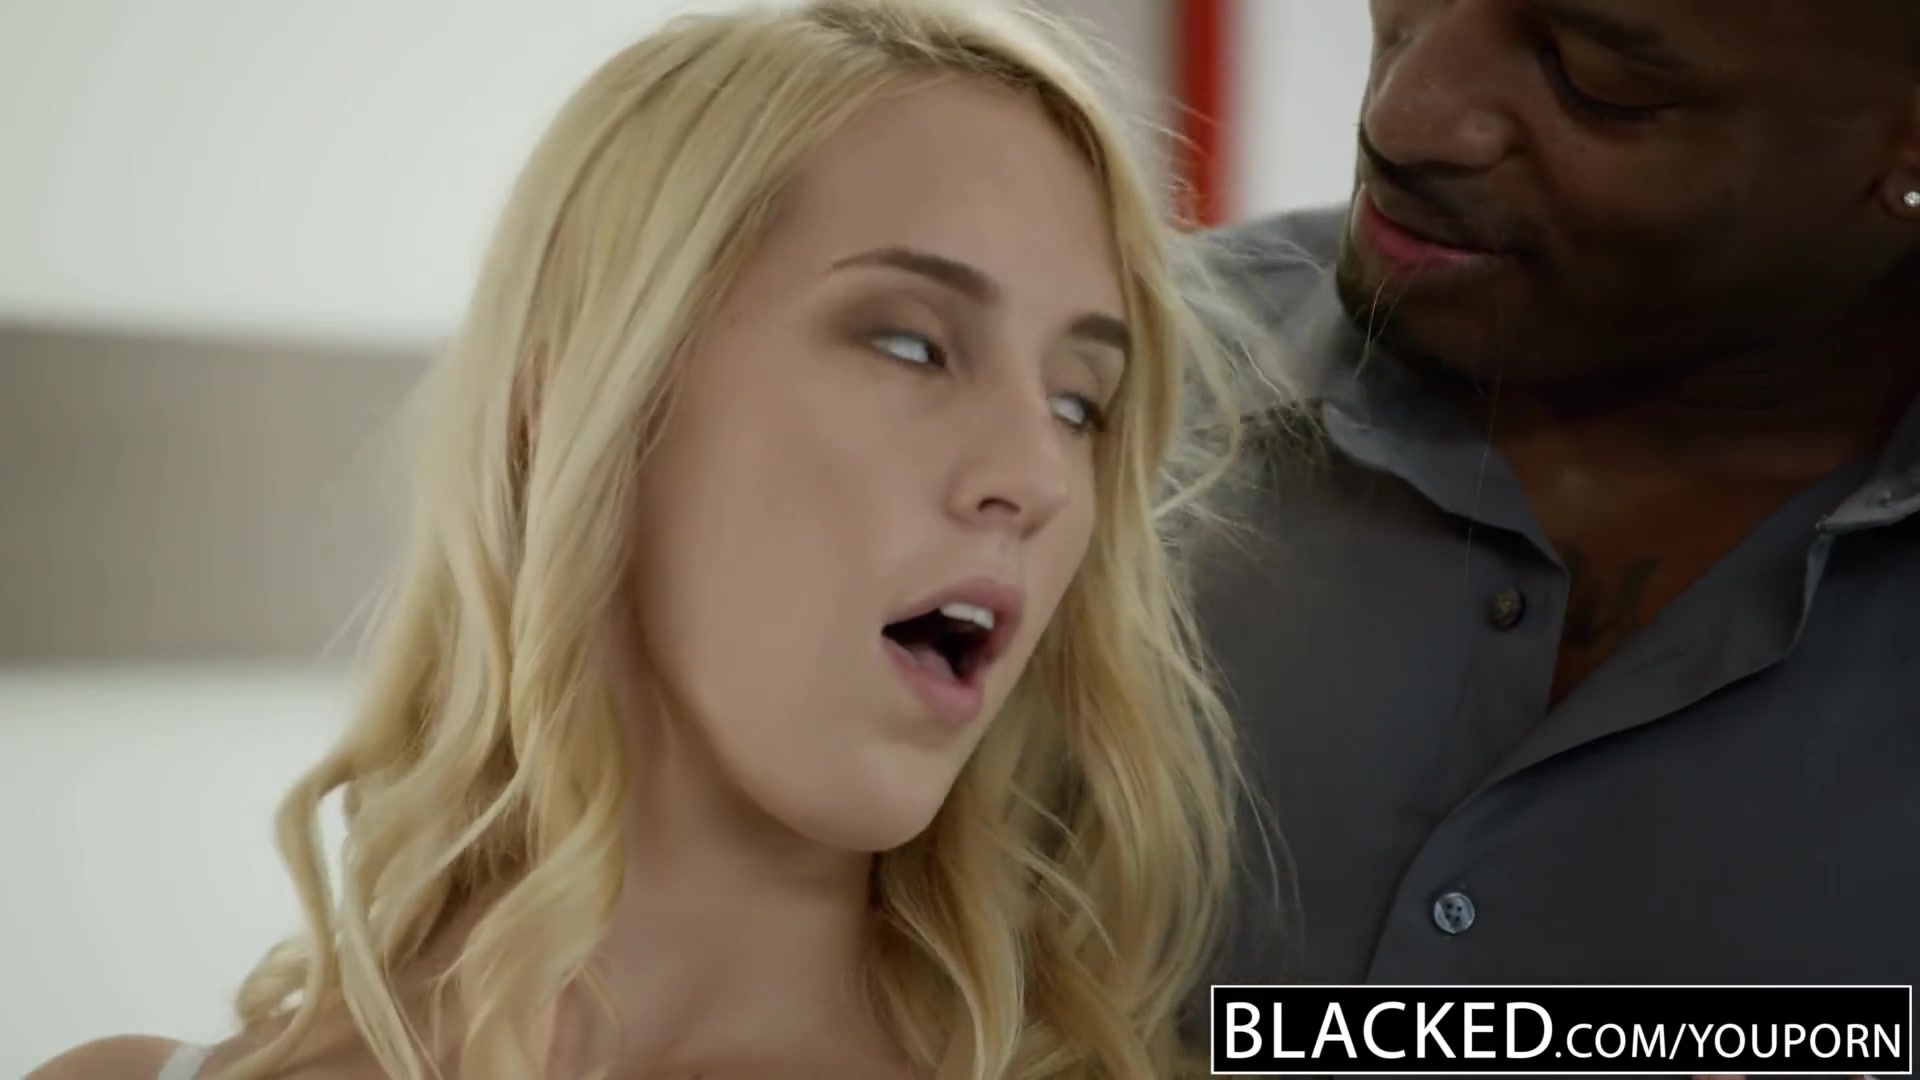 BLACKED Hot Blonde Girl Cadenca Lux Pays Off Boyfriends Debt By Fucking BBC